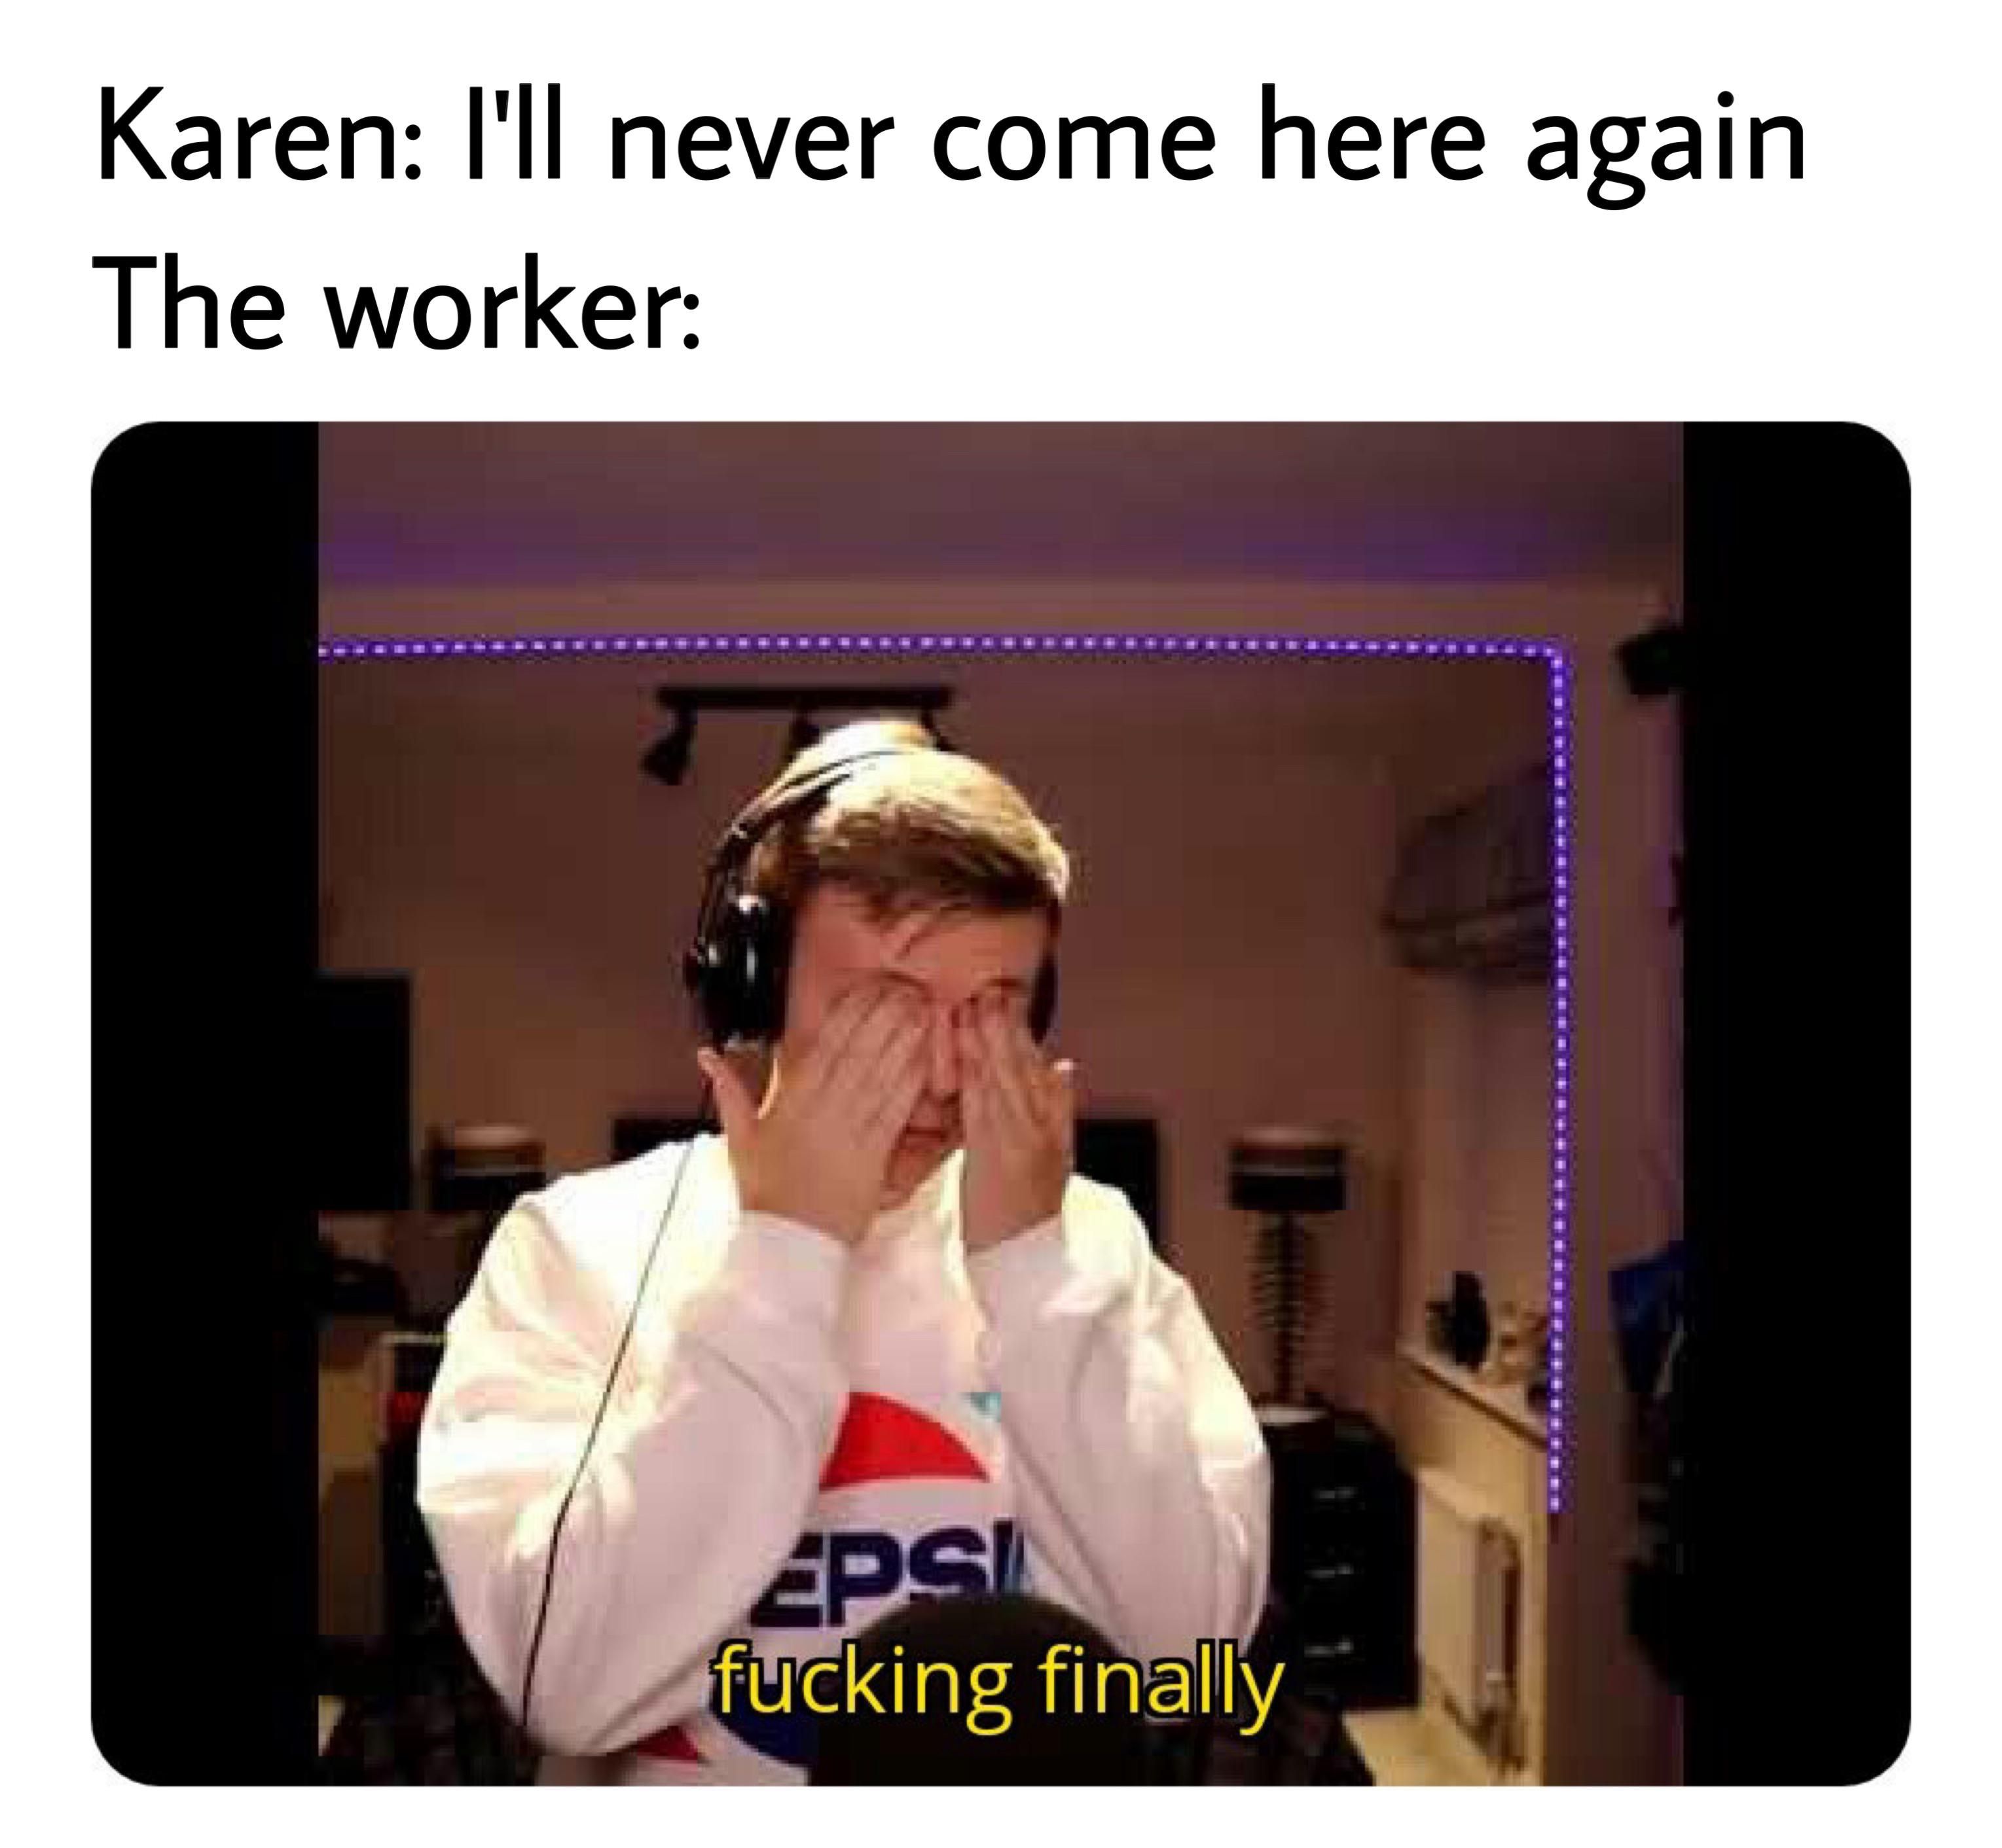 Go home Karen